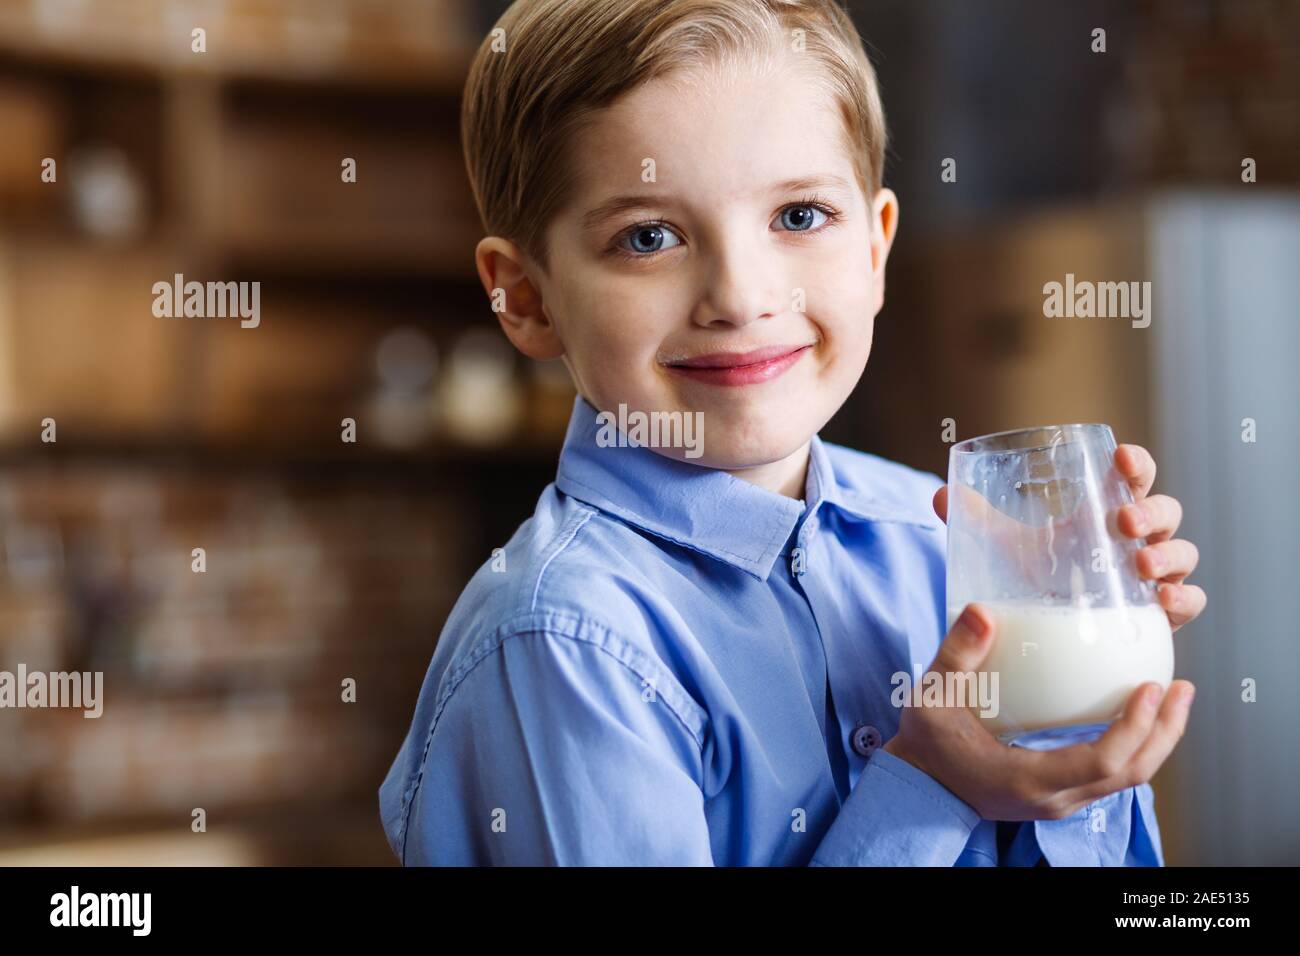 Portrait of smiling boy drinking milk Stock Photo